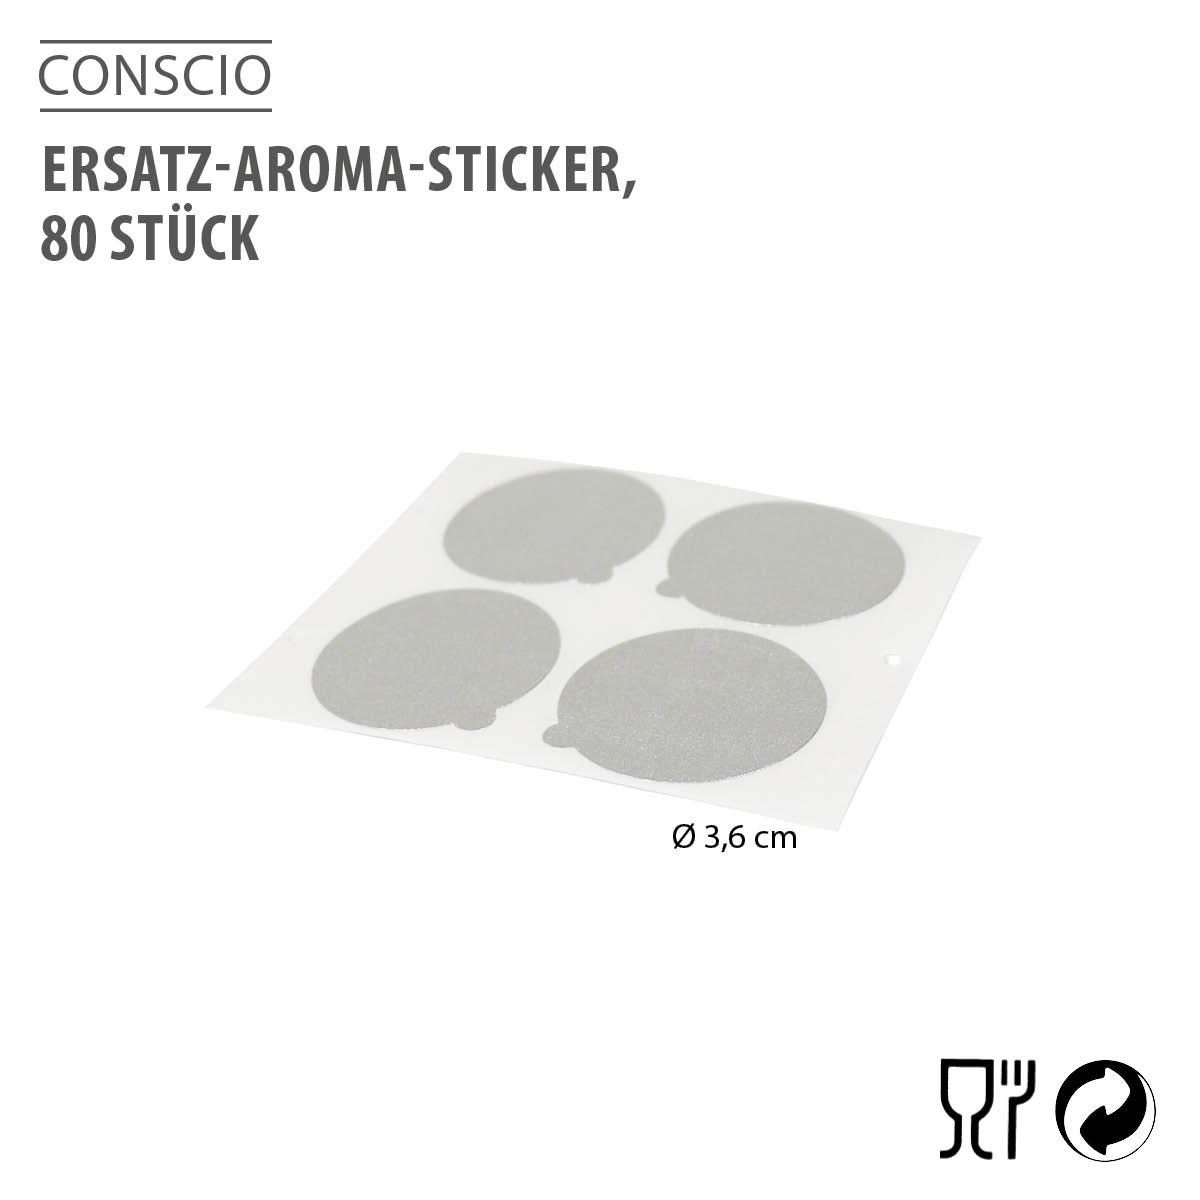 Ersatz-Aroma-Sticker CONSCIO, 80 Stück